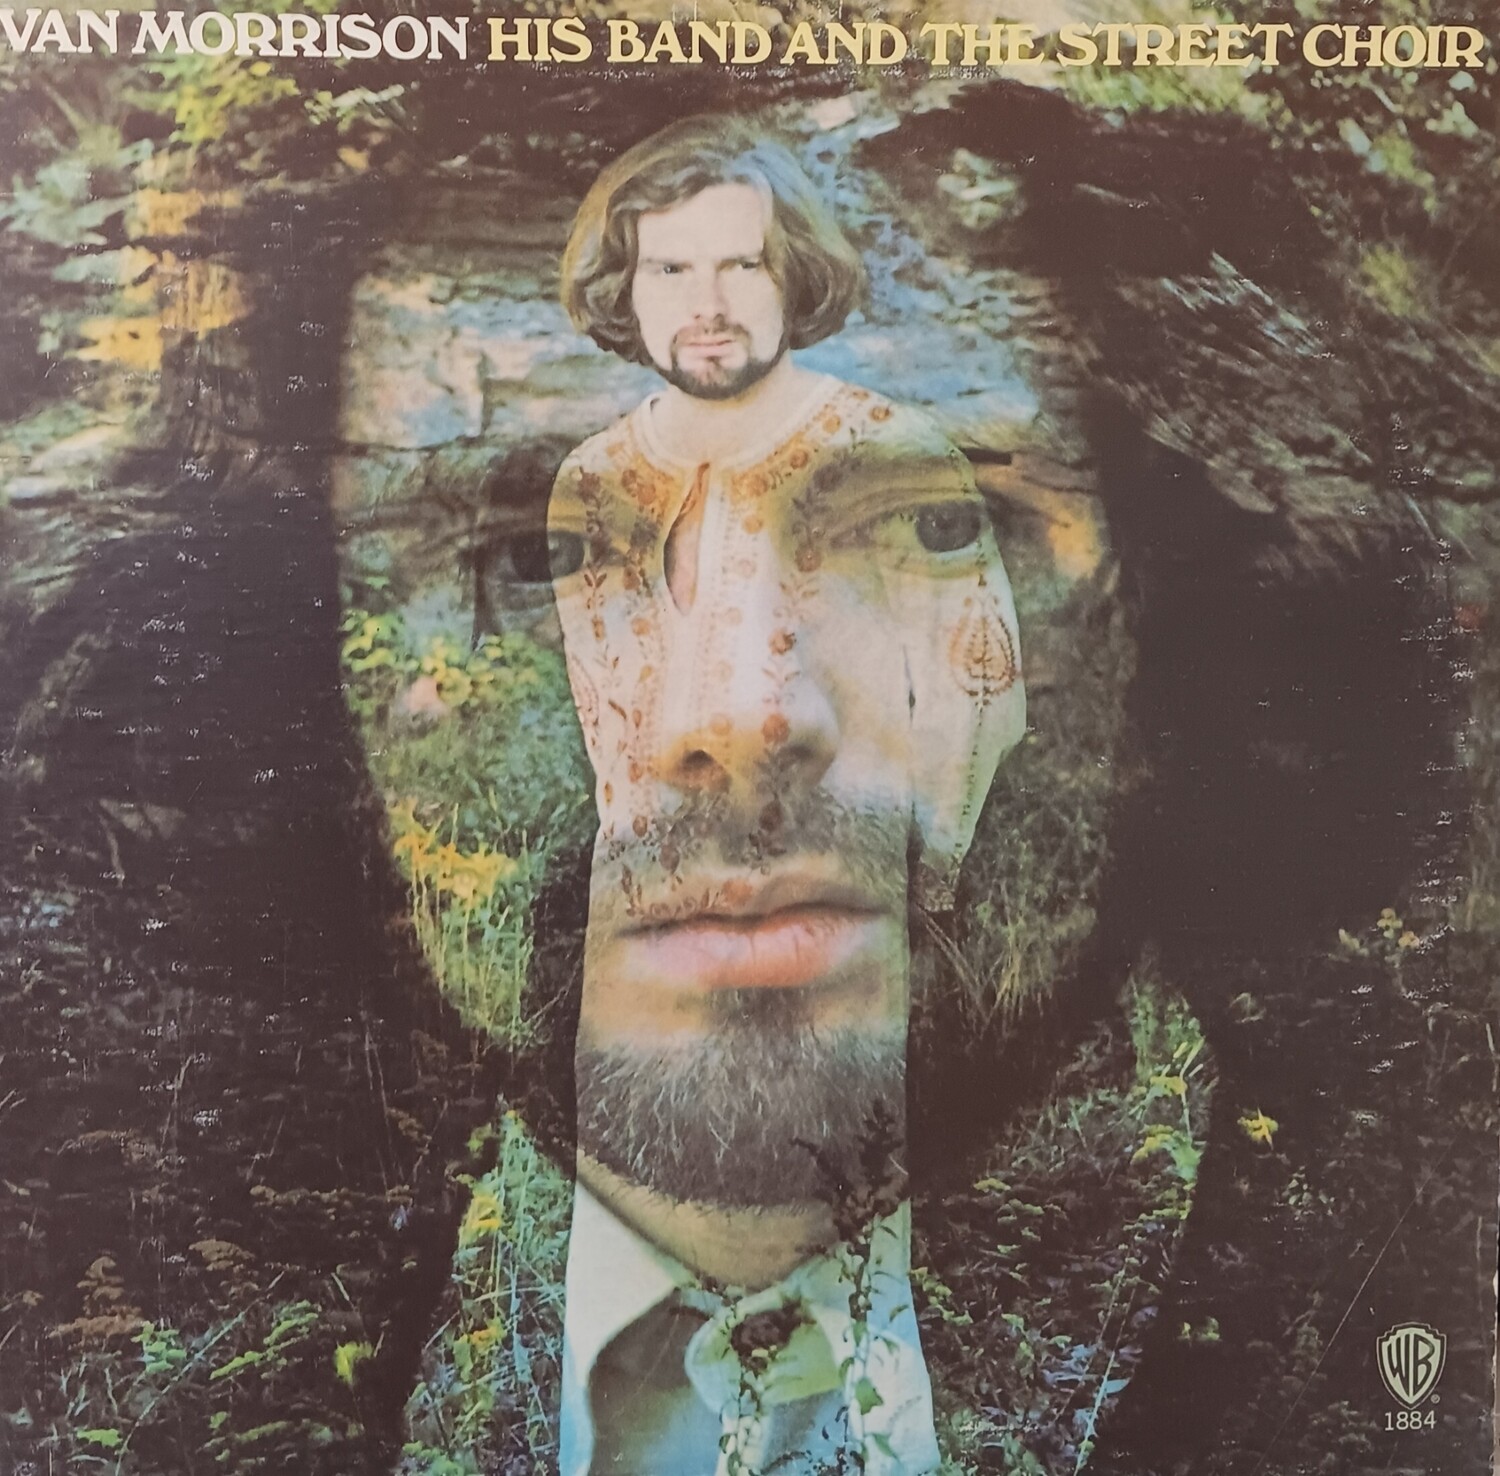 Van Morrison - His band and The Street Choir